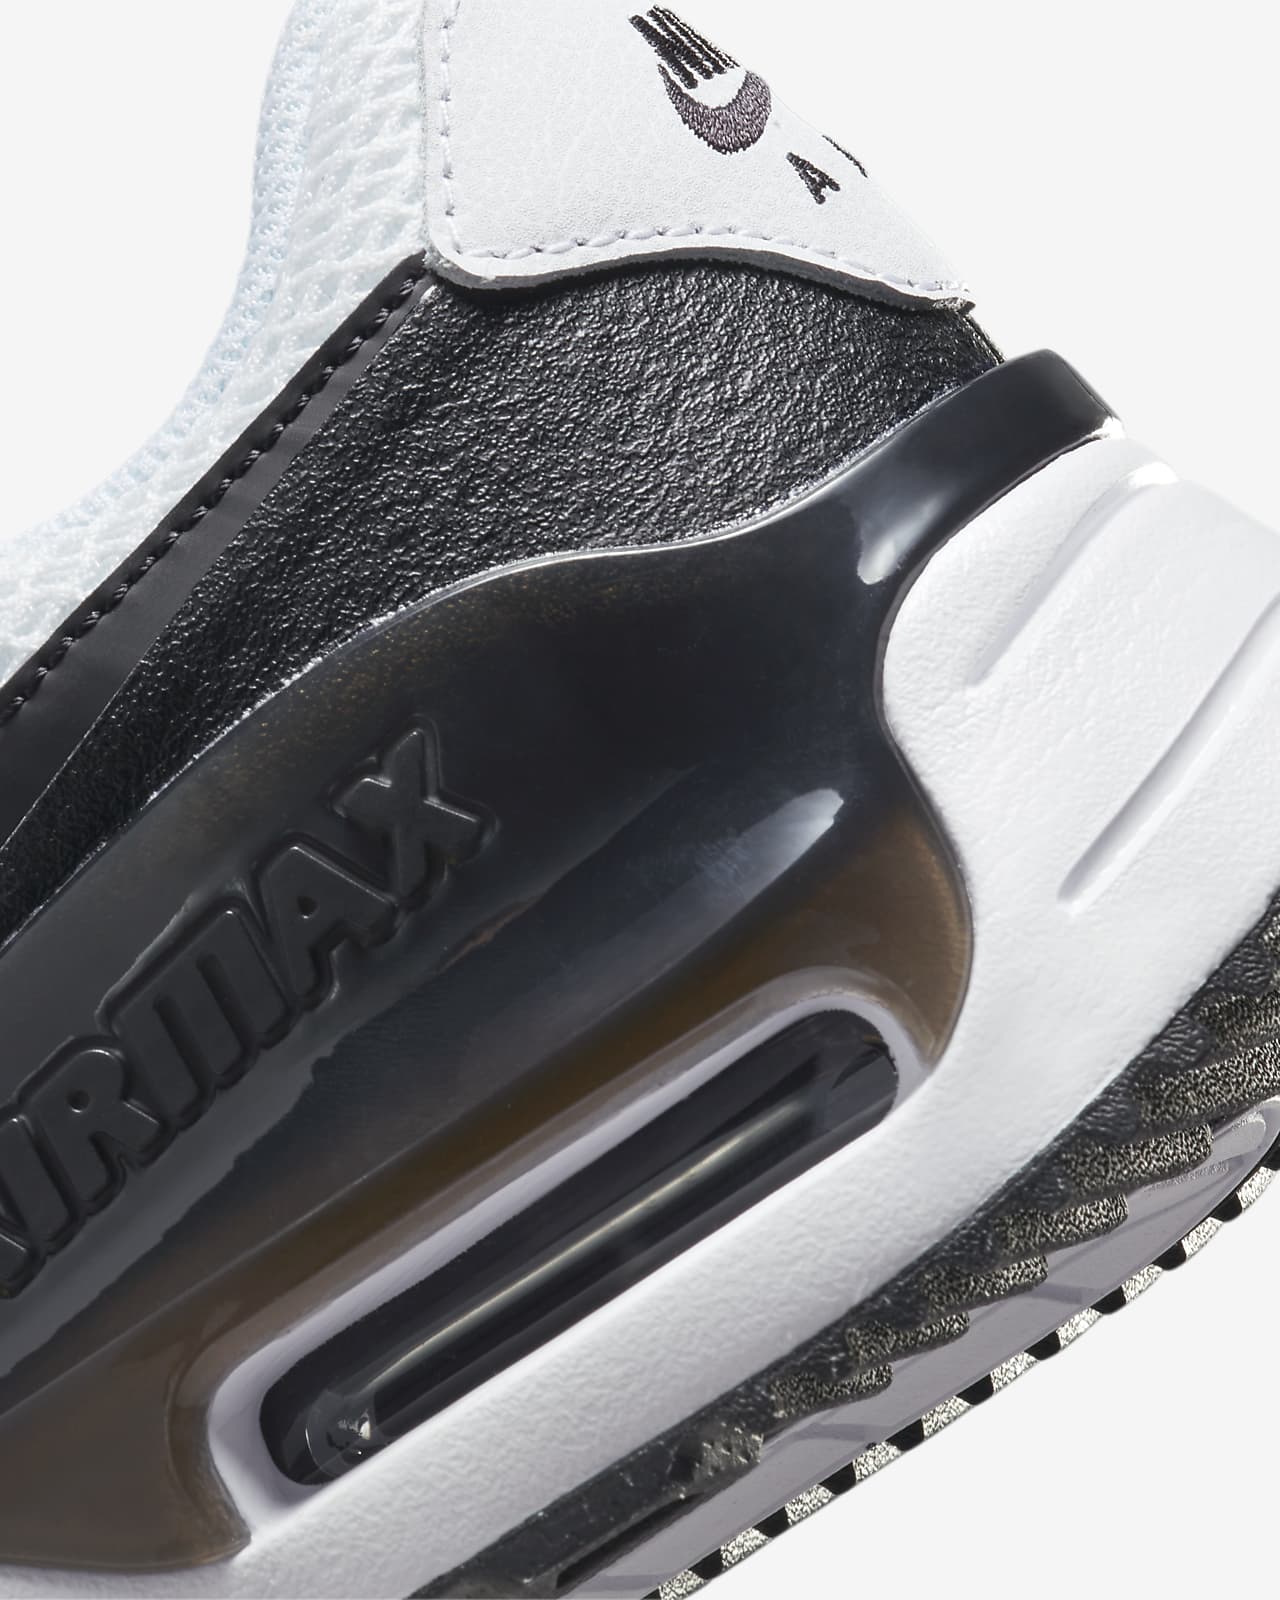 Grey Nike Mens Air Max Systm Sneaker, Mens